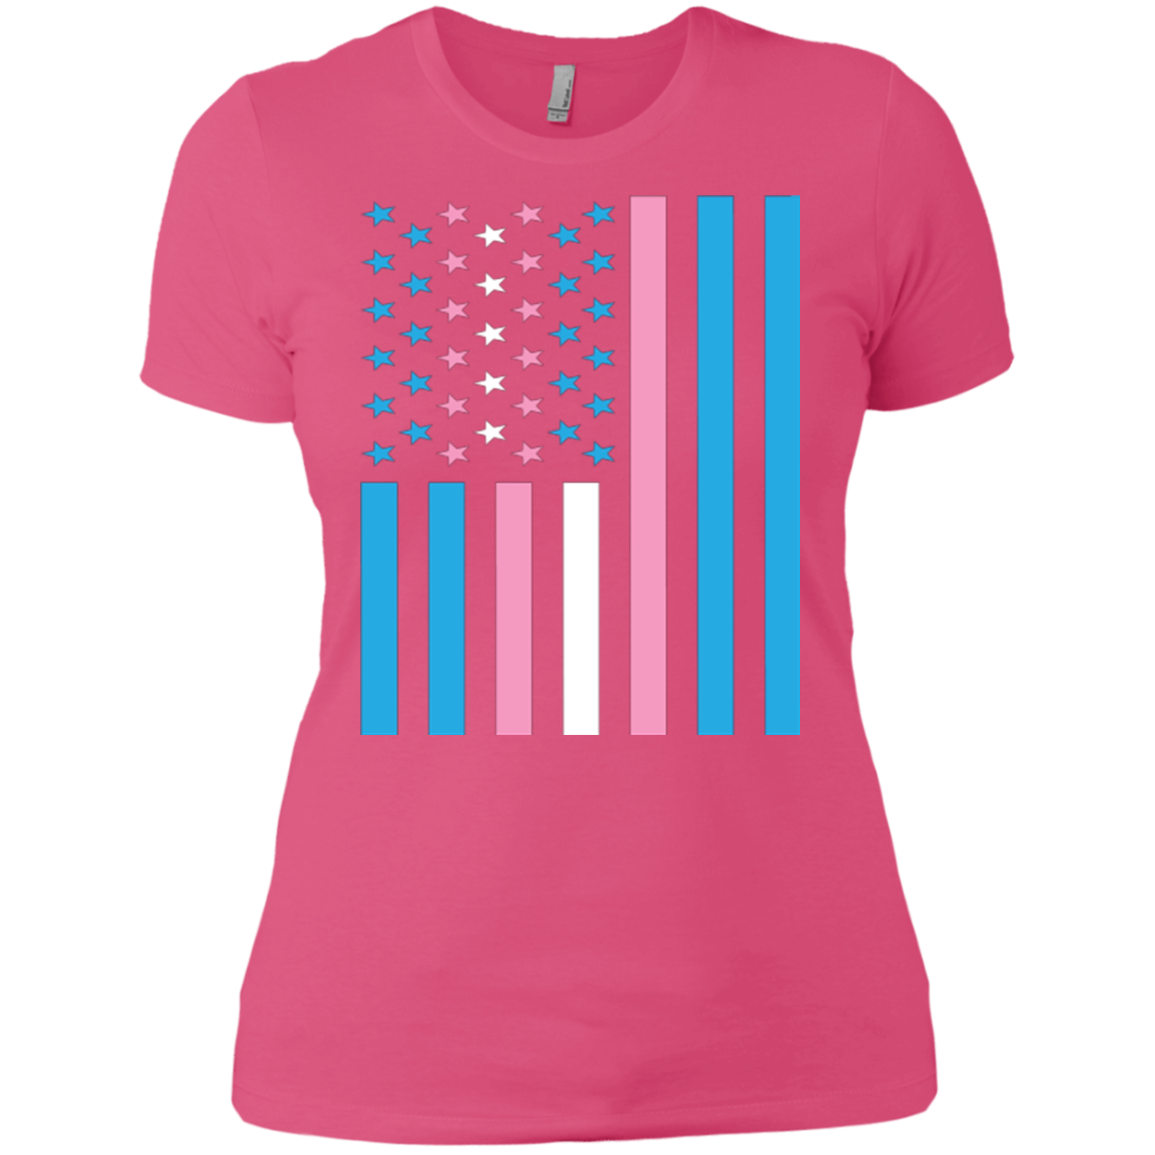 Trans Flag Pride pink cute Shirt for women